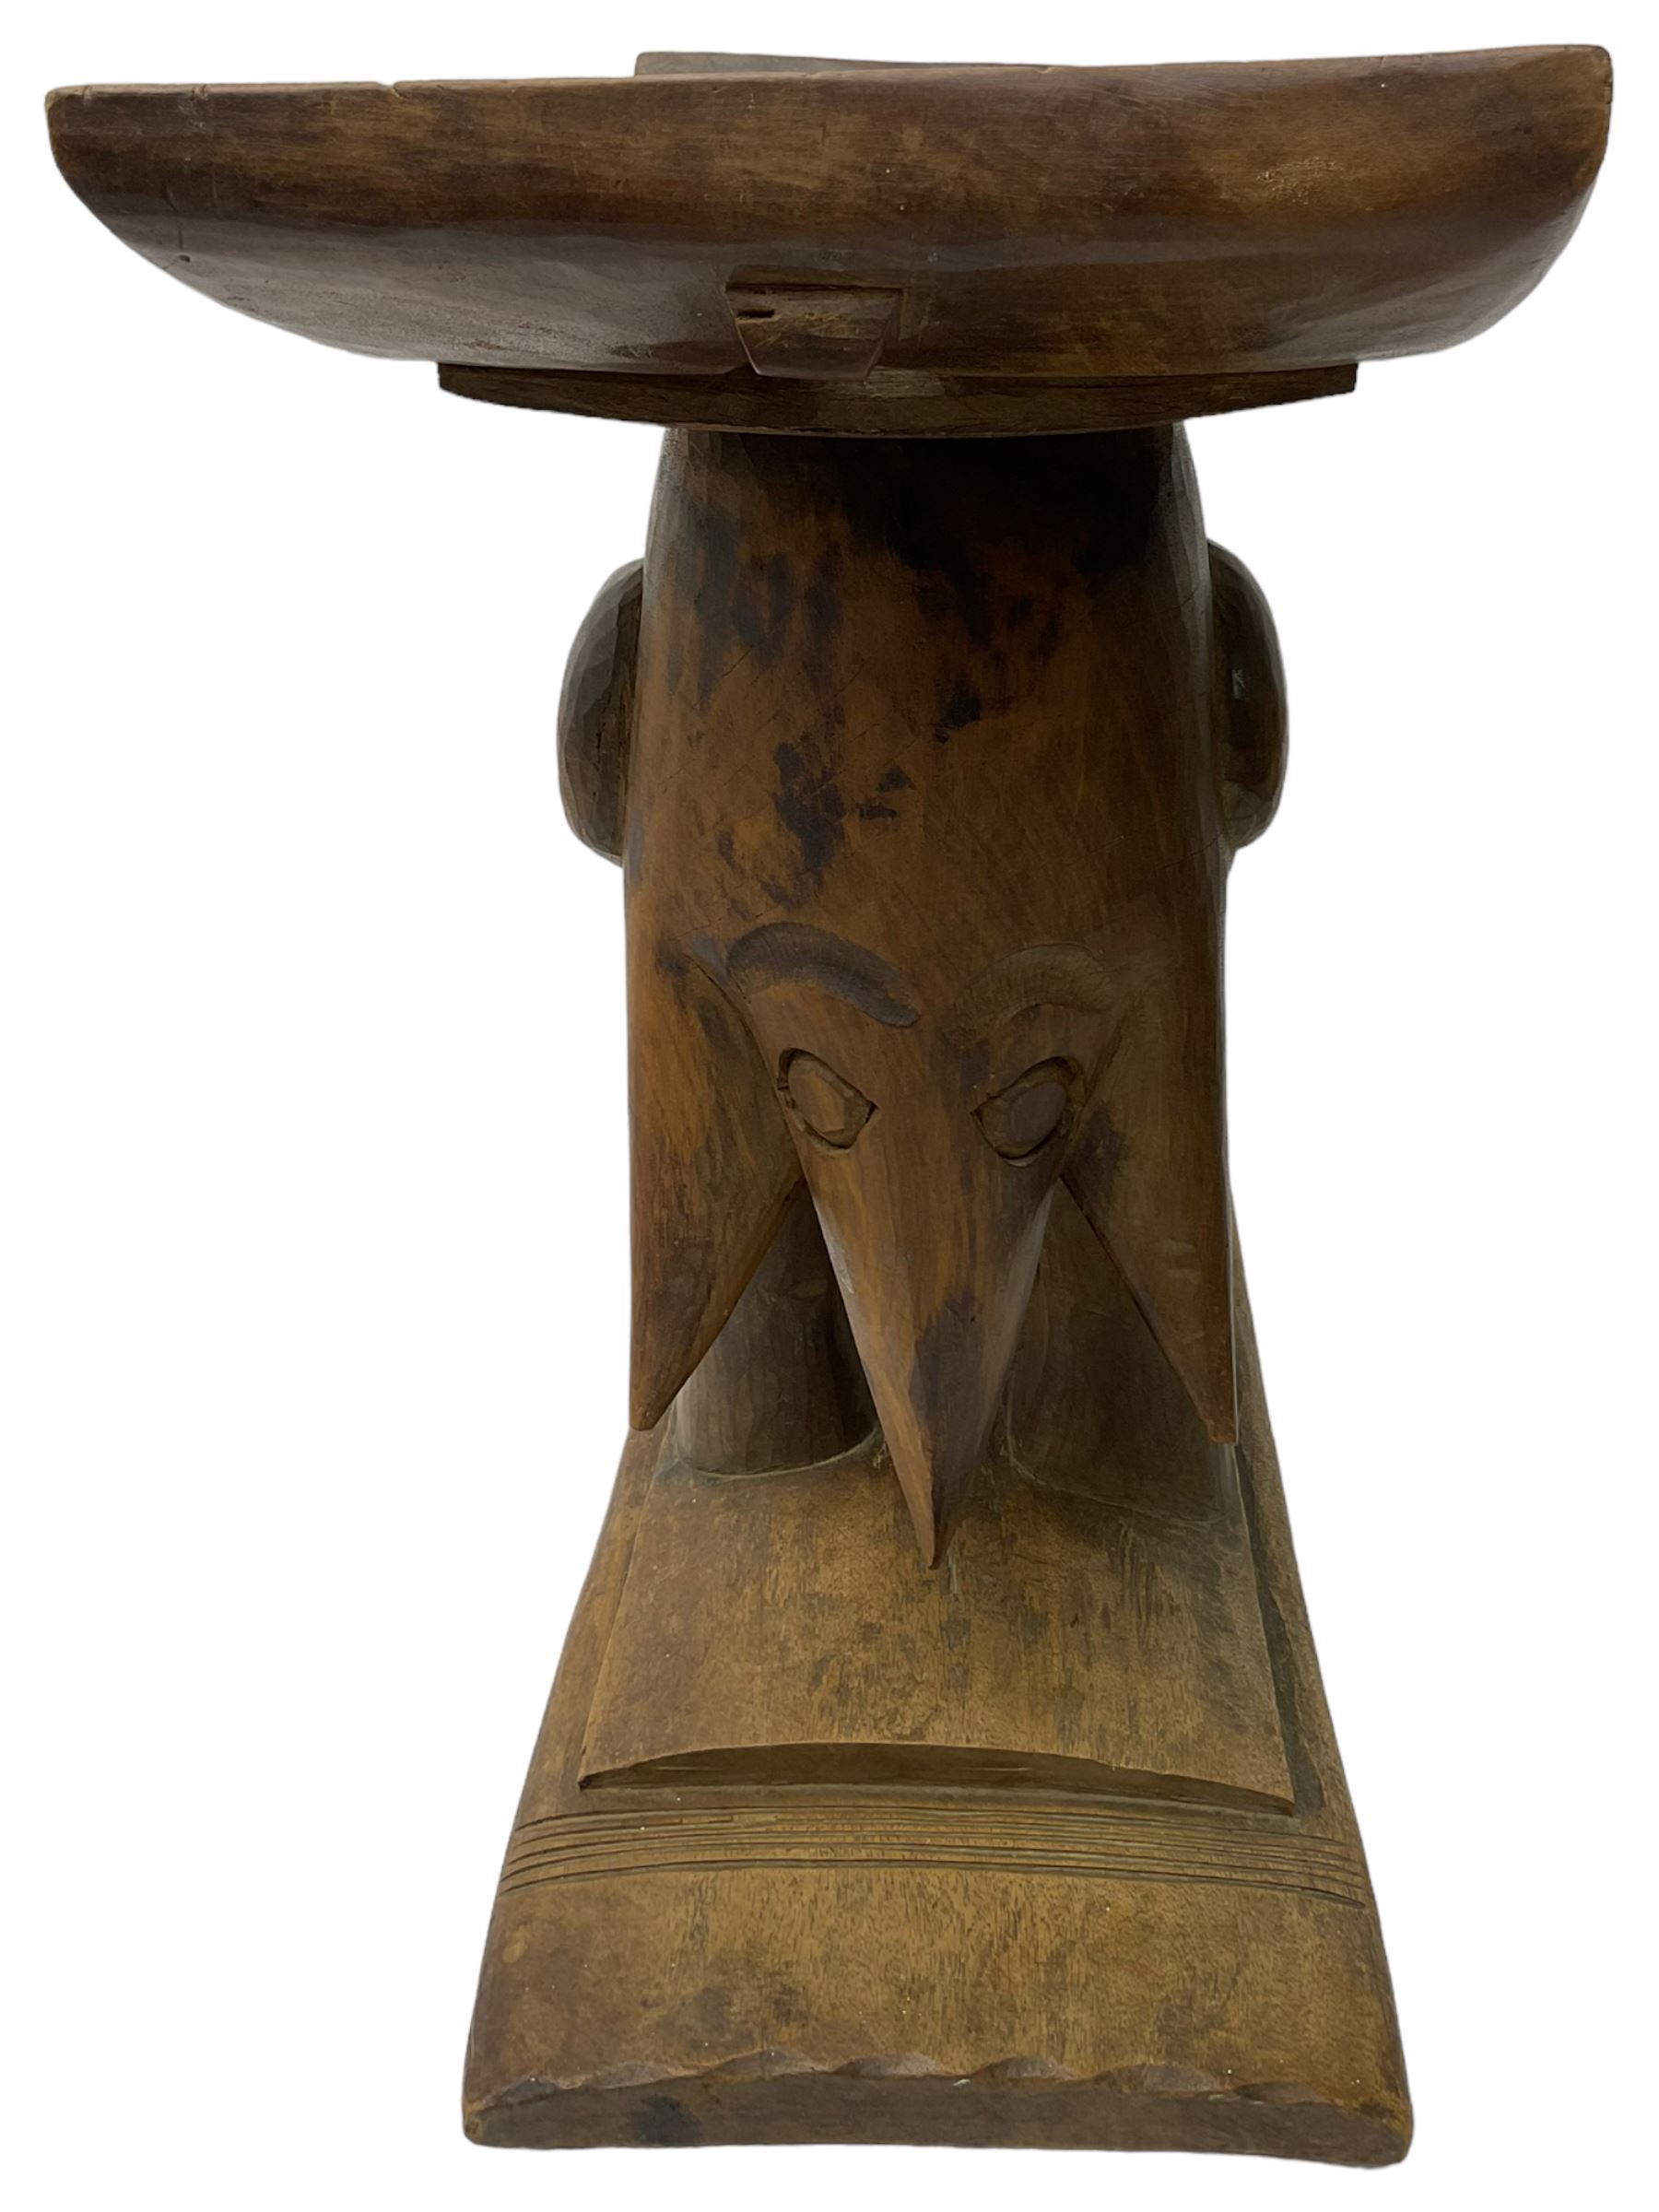 20th century African Ashanti hardwood stool - Image 4 of 10